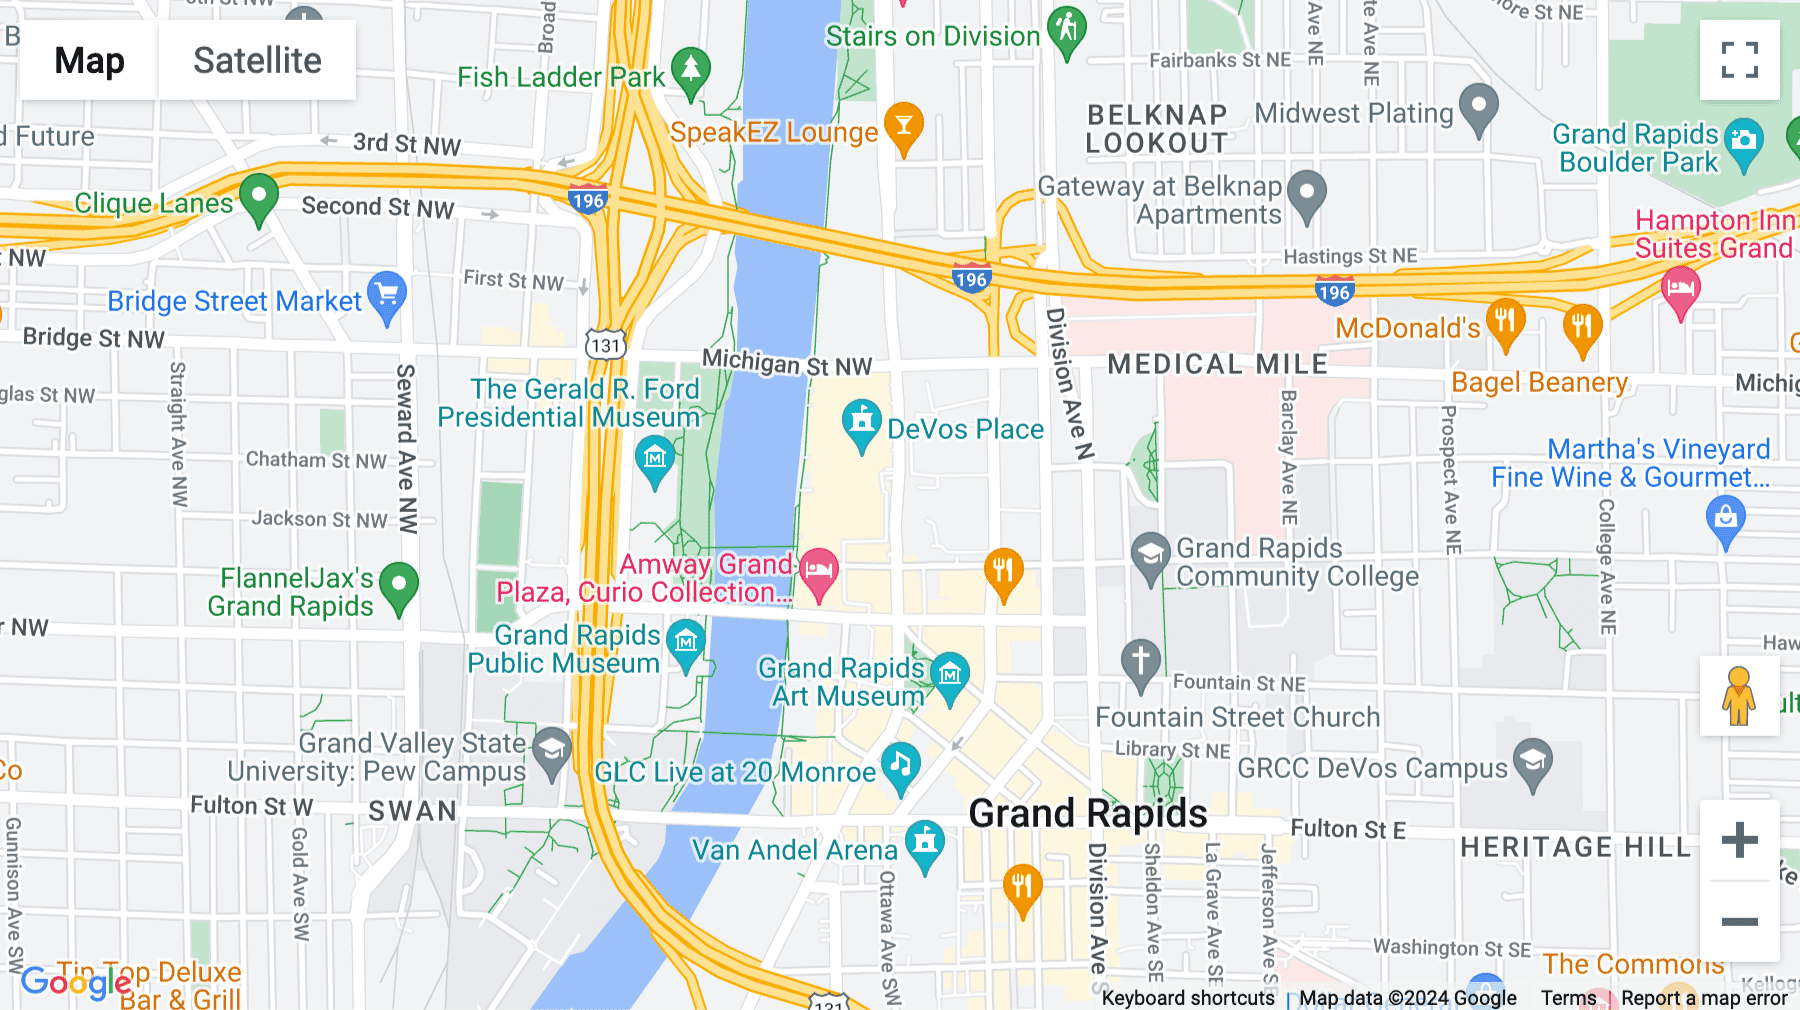 Click for interative map of Calder Plaza, Downtown Grand Rapids, 250 Monroe Avenue, Grand Rapids, Grand Rapids